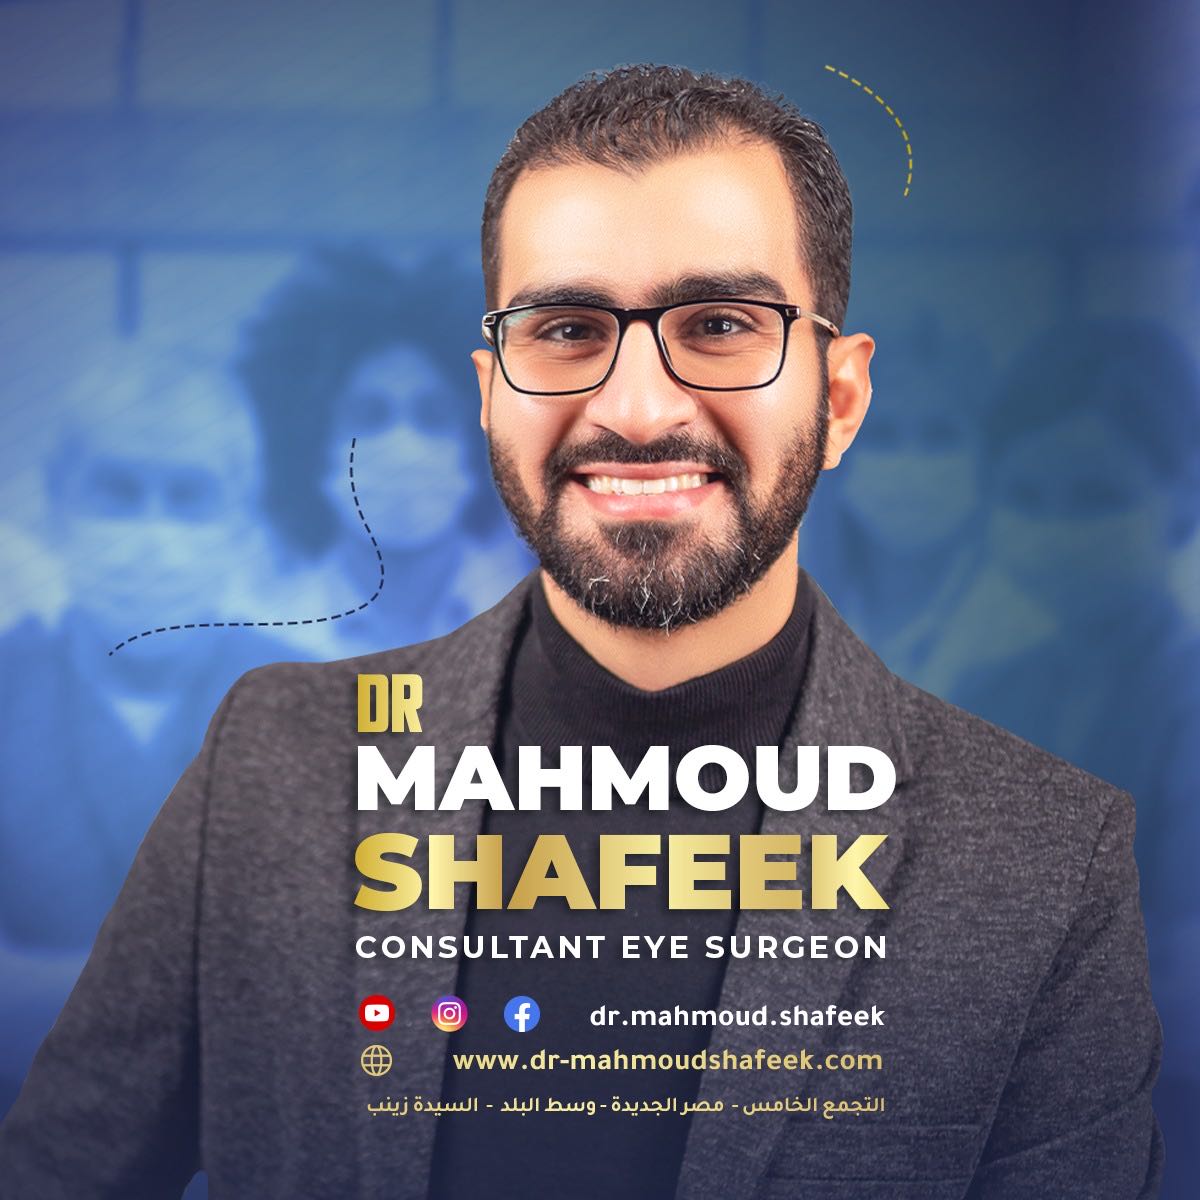 Dr. Mahmoud Shafeek